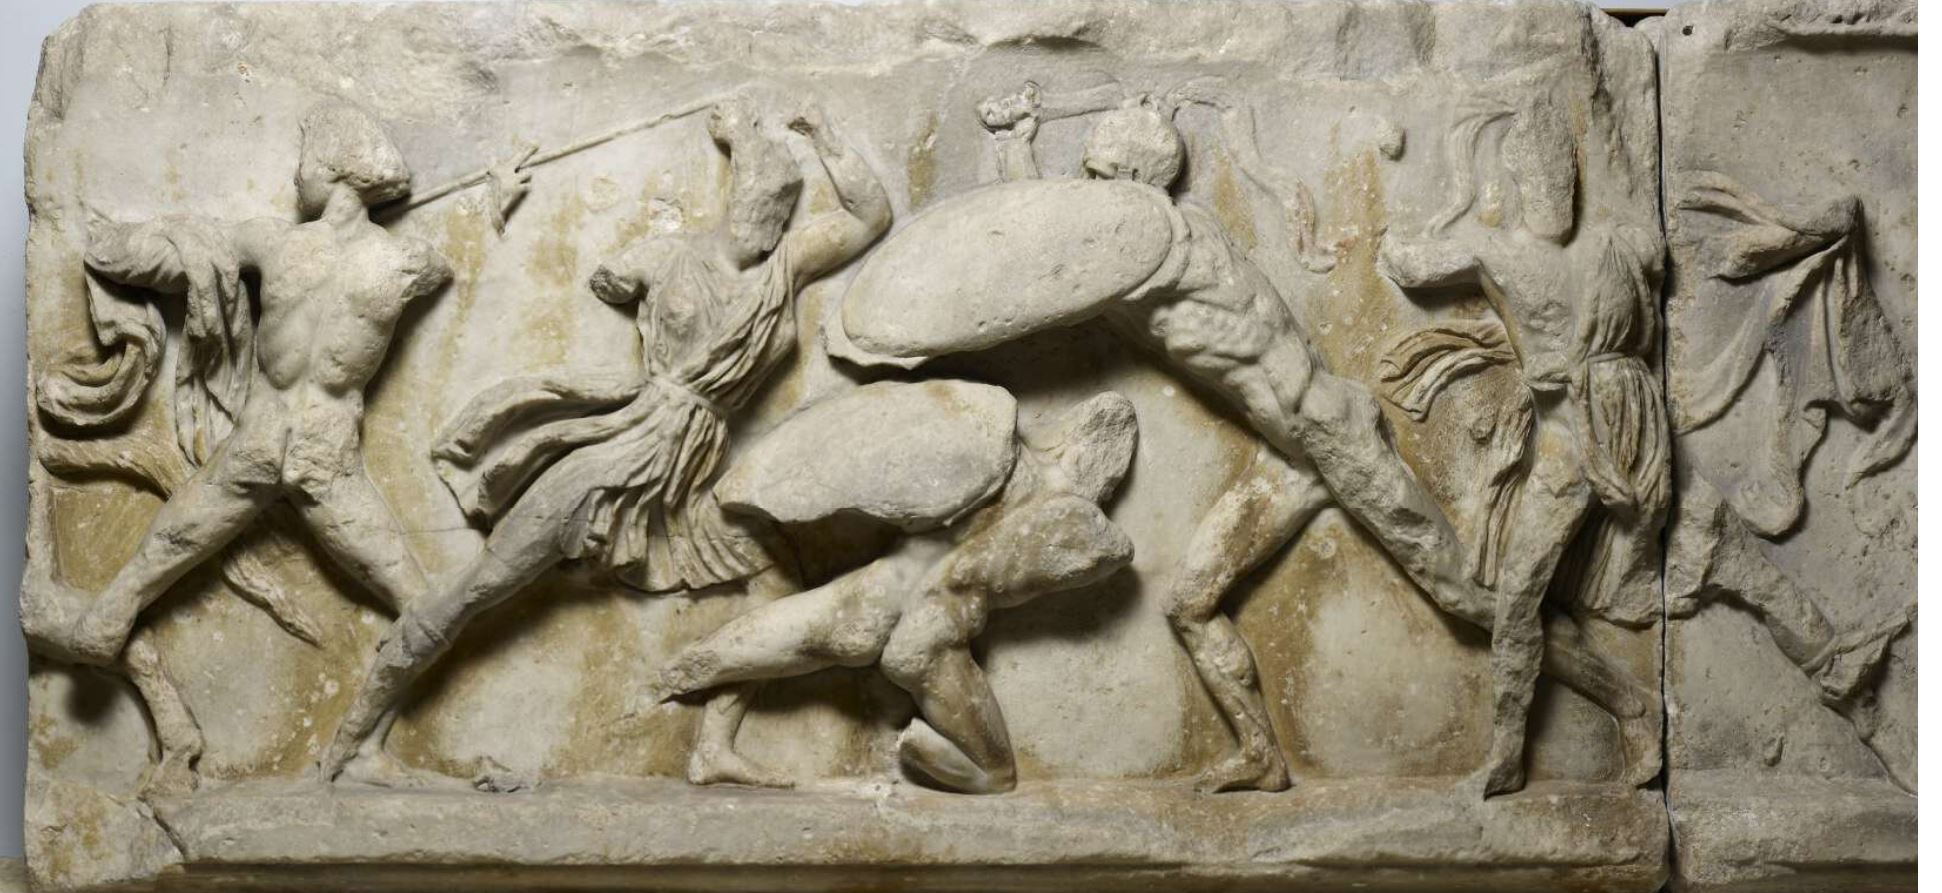 combats 350 av JC Combat entre Grec et Amazone Frise du mausolee d'Halicarnasse British Museum grec contre cavaliere